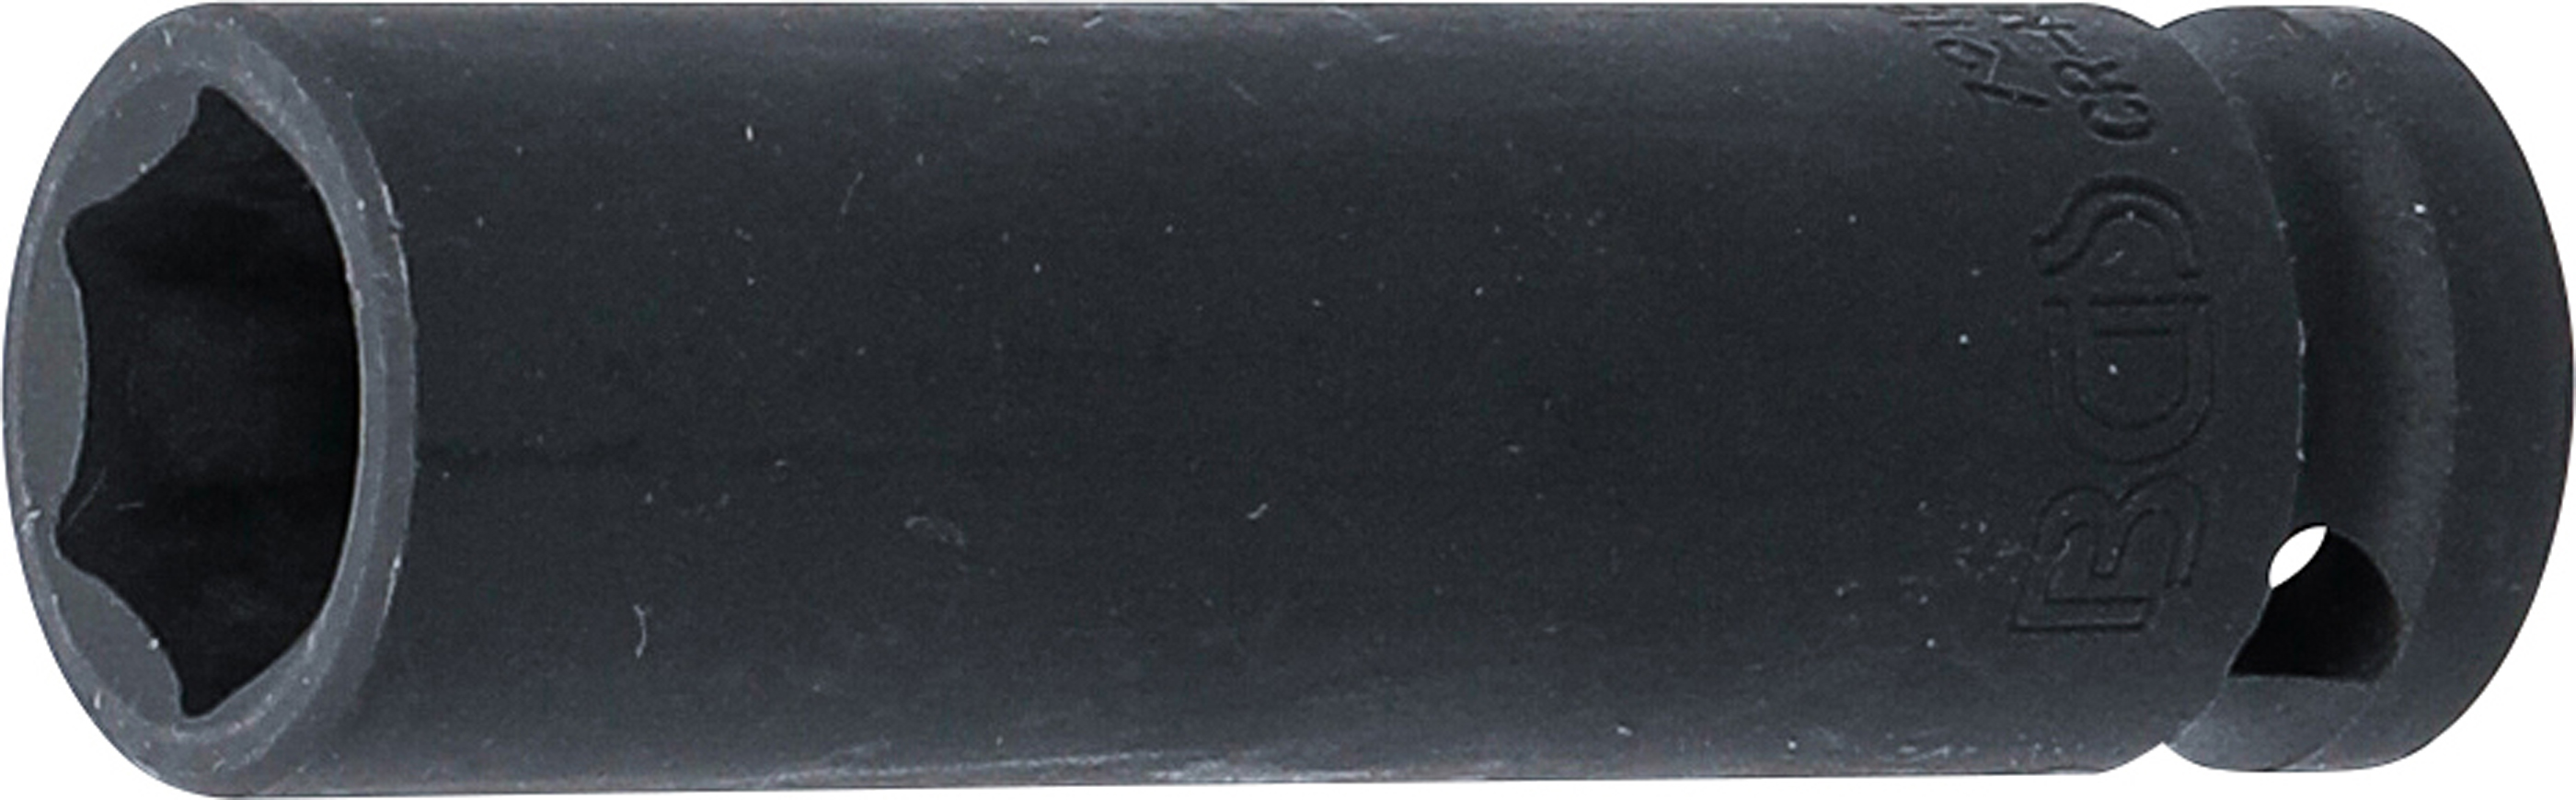 BGS-7216 Tubulara Adanca de Impact,Hex.16mm,act.1/2"